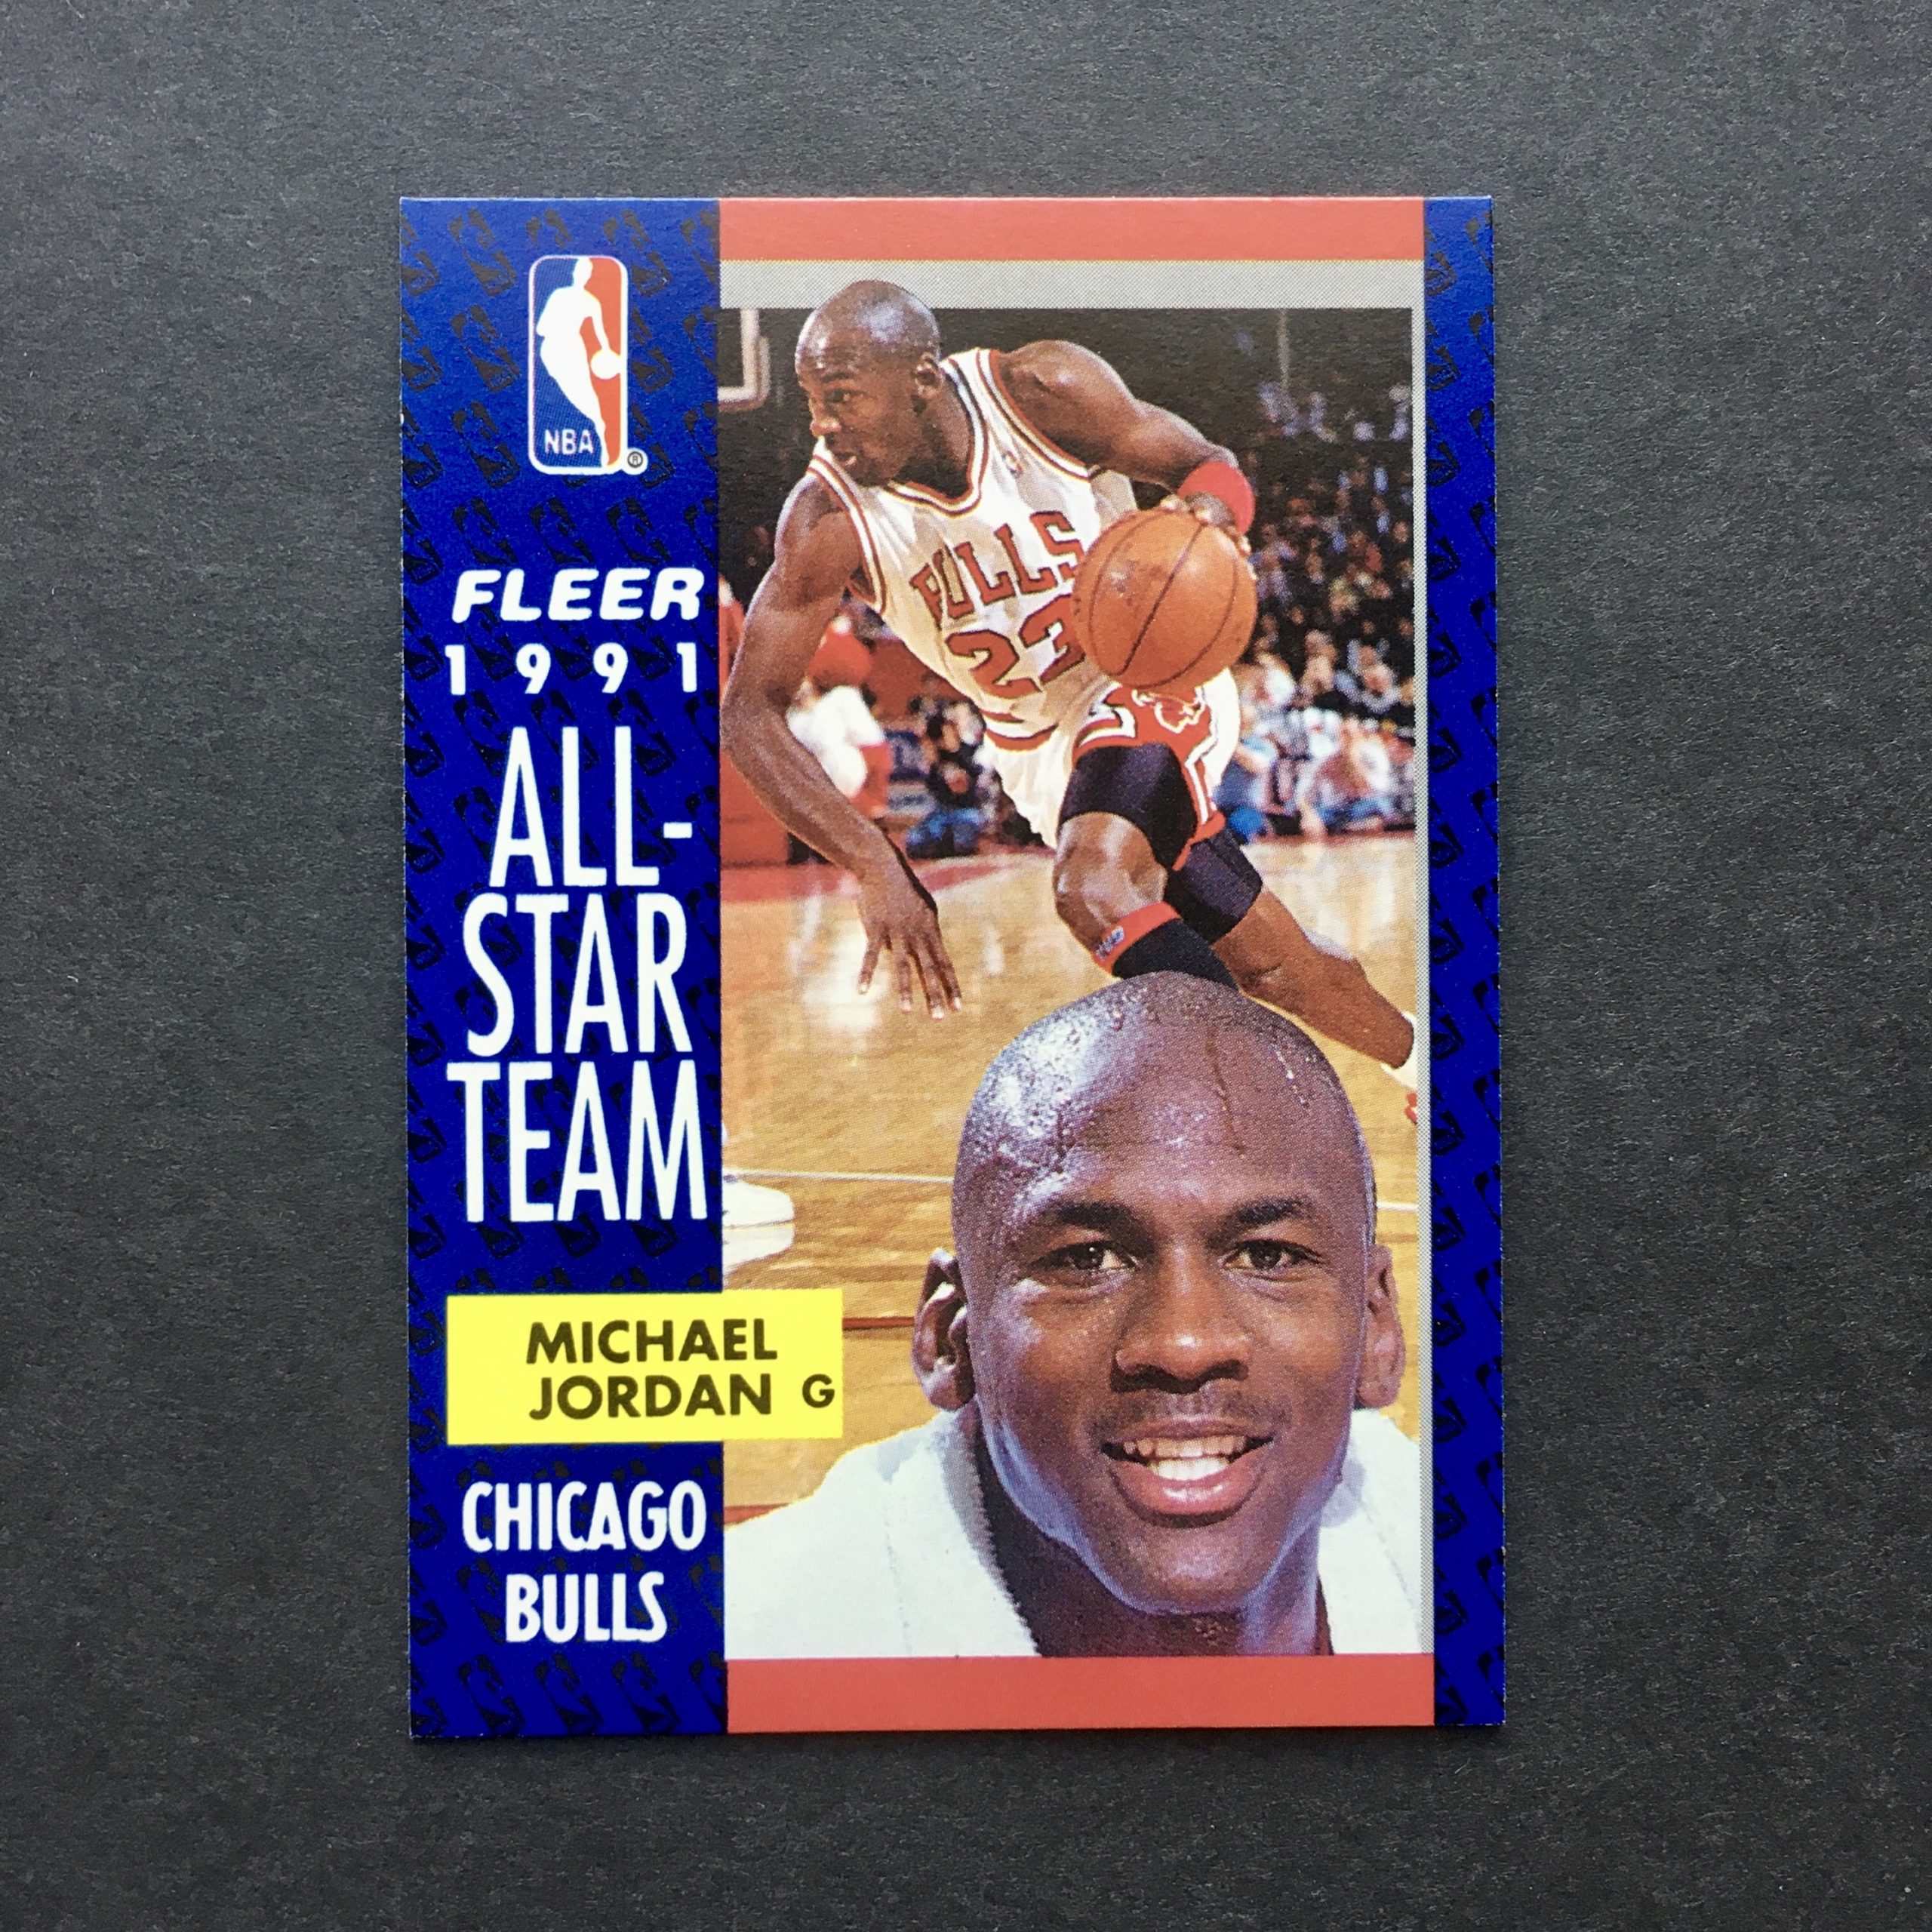 Michael Jordan Fleer All-Star Card